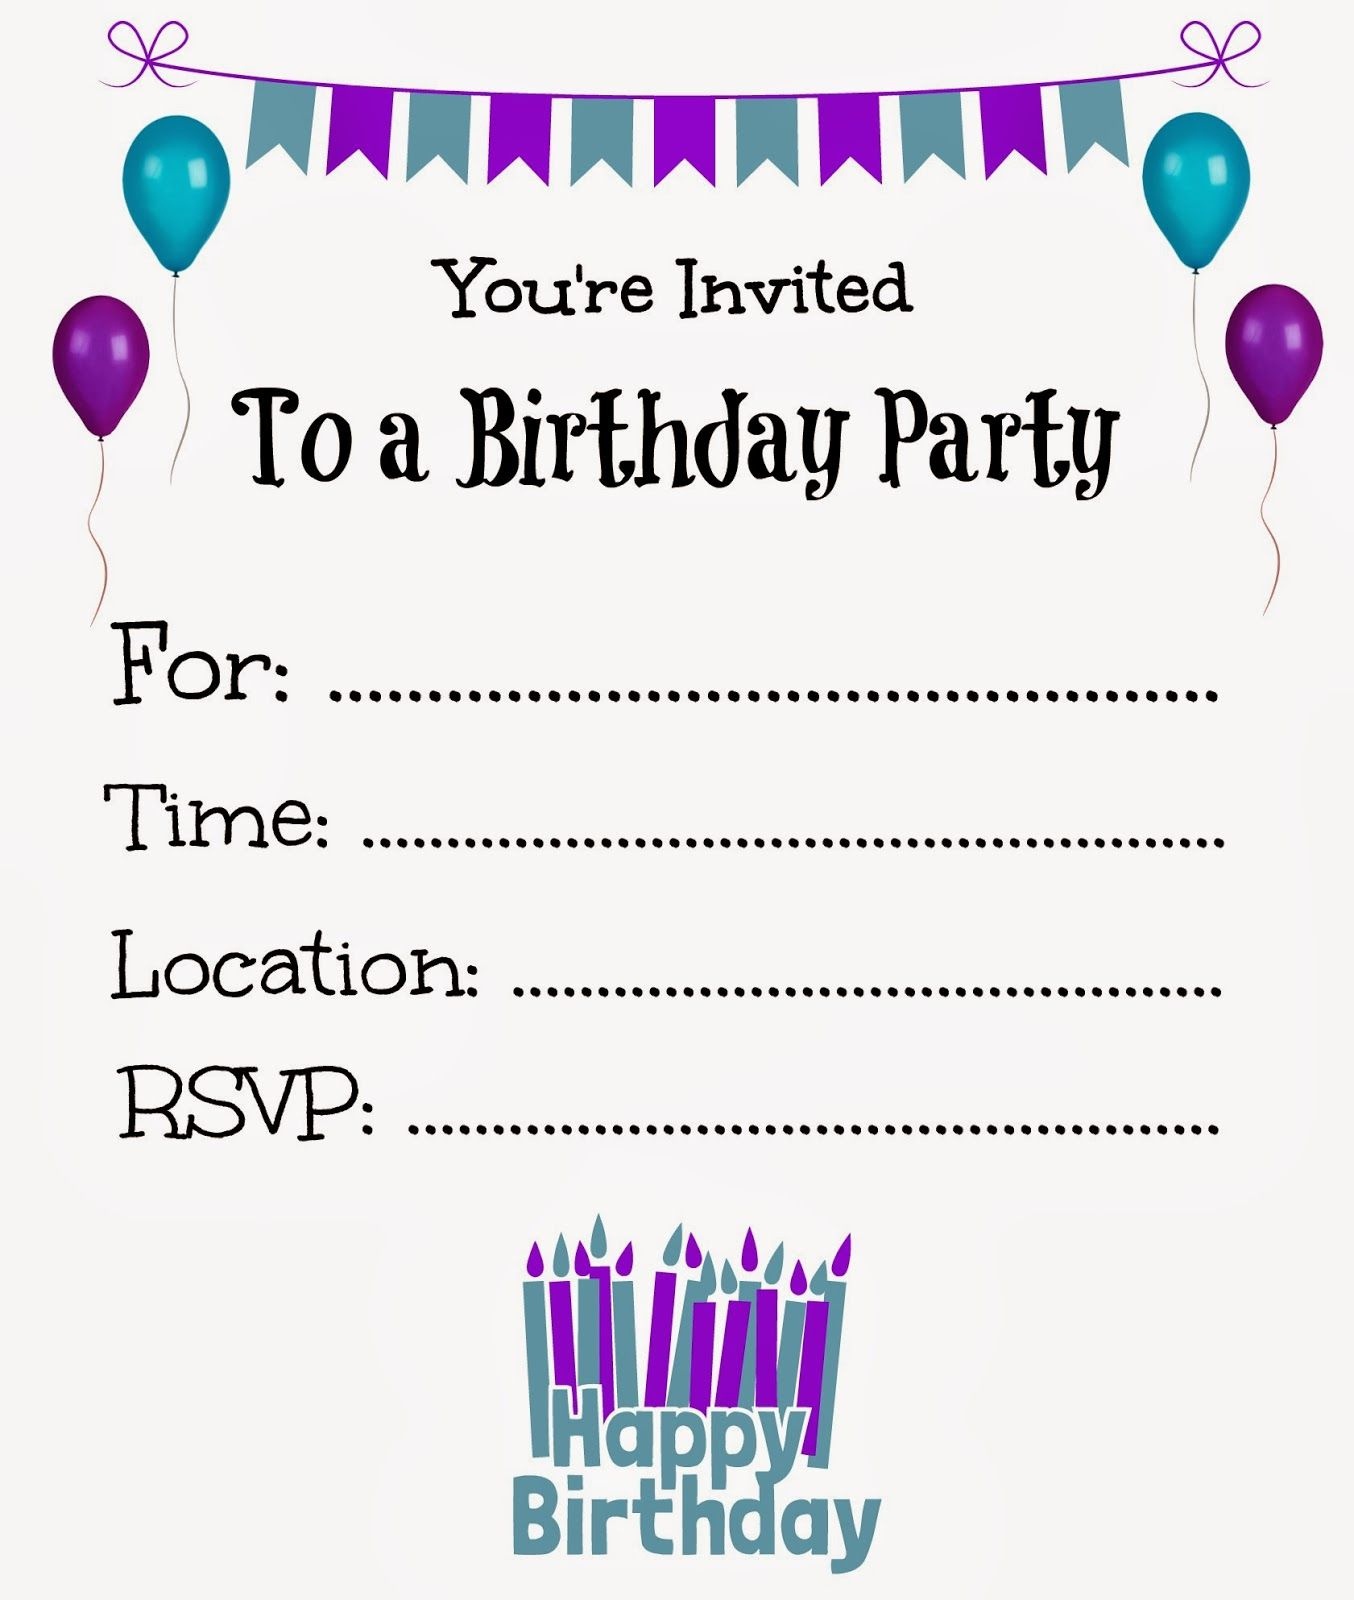 Free Printable Birthday Invitations For Kids #freeprintables - Make Your Own Birthday Party Invitations Free Printable